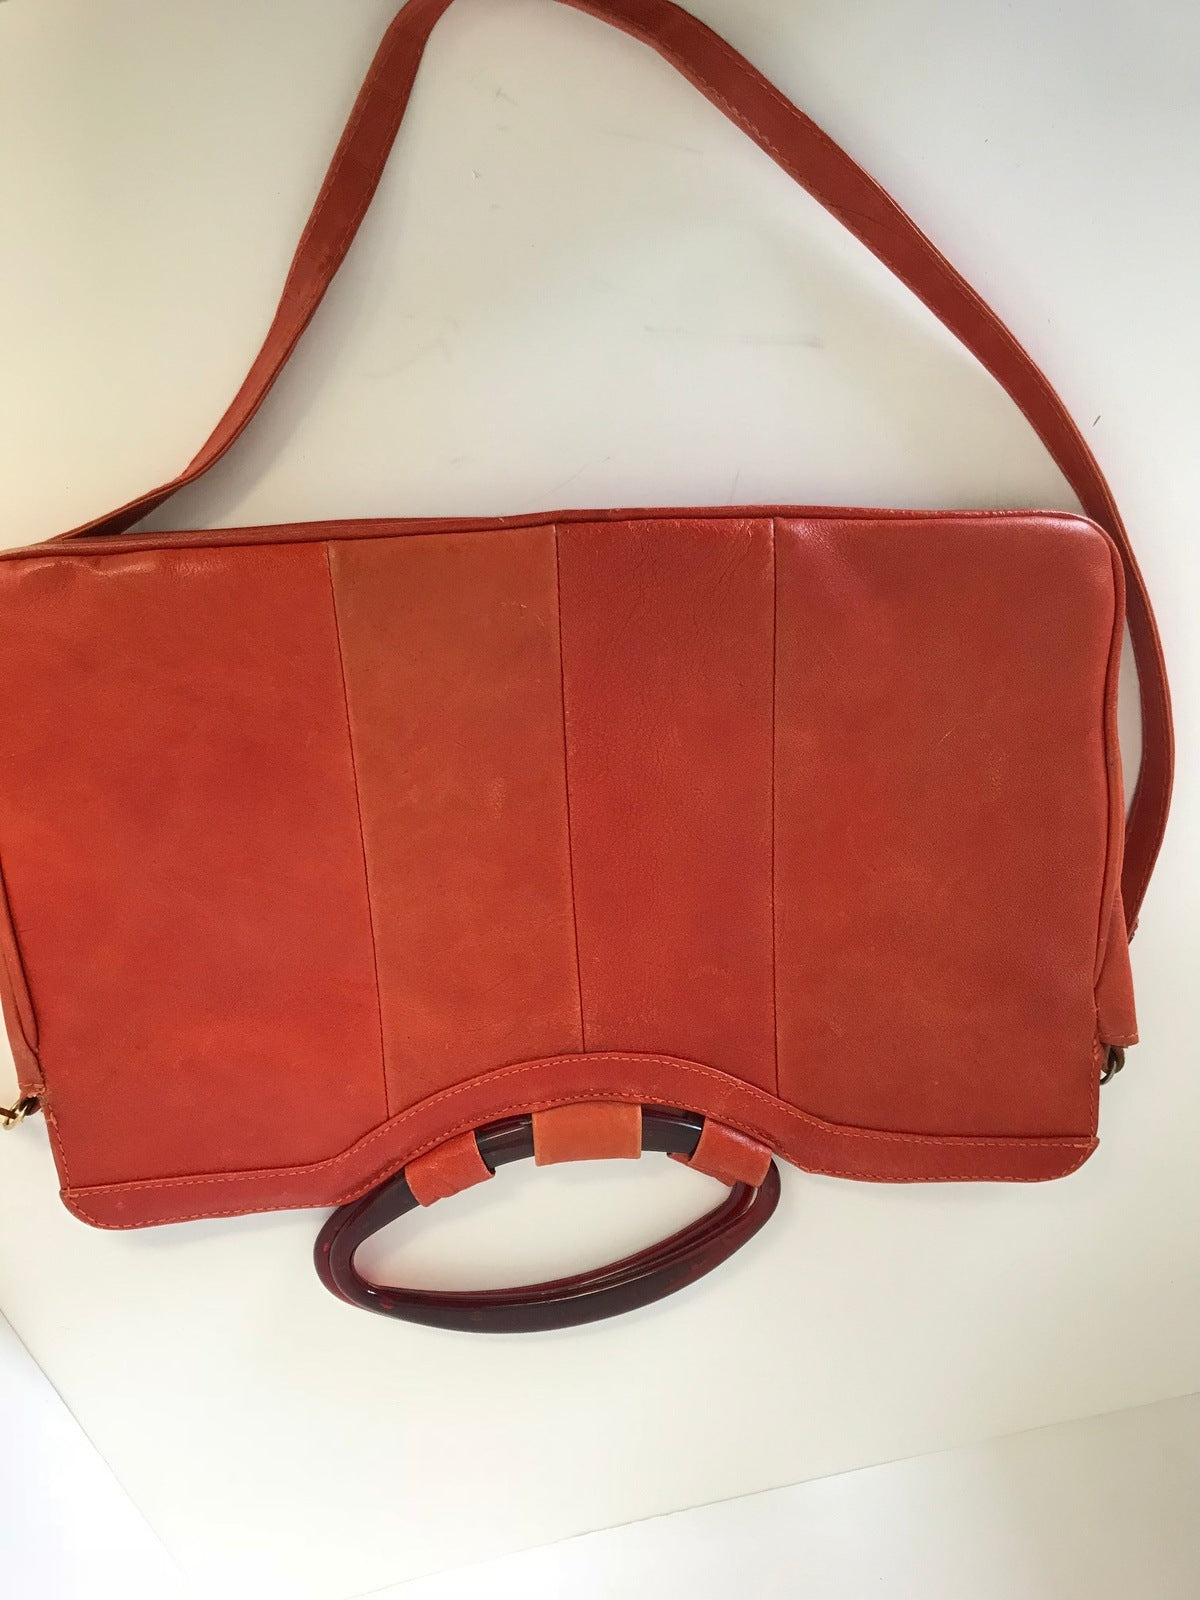 Orange Leather Handbag Purse Large Bag Vintage Accessories